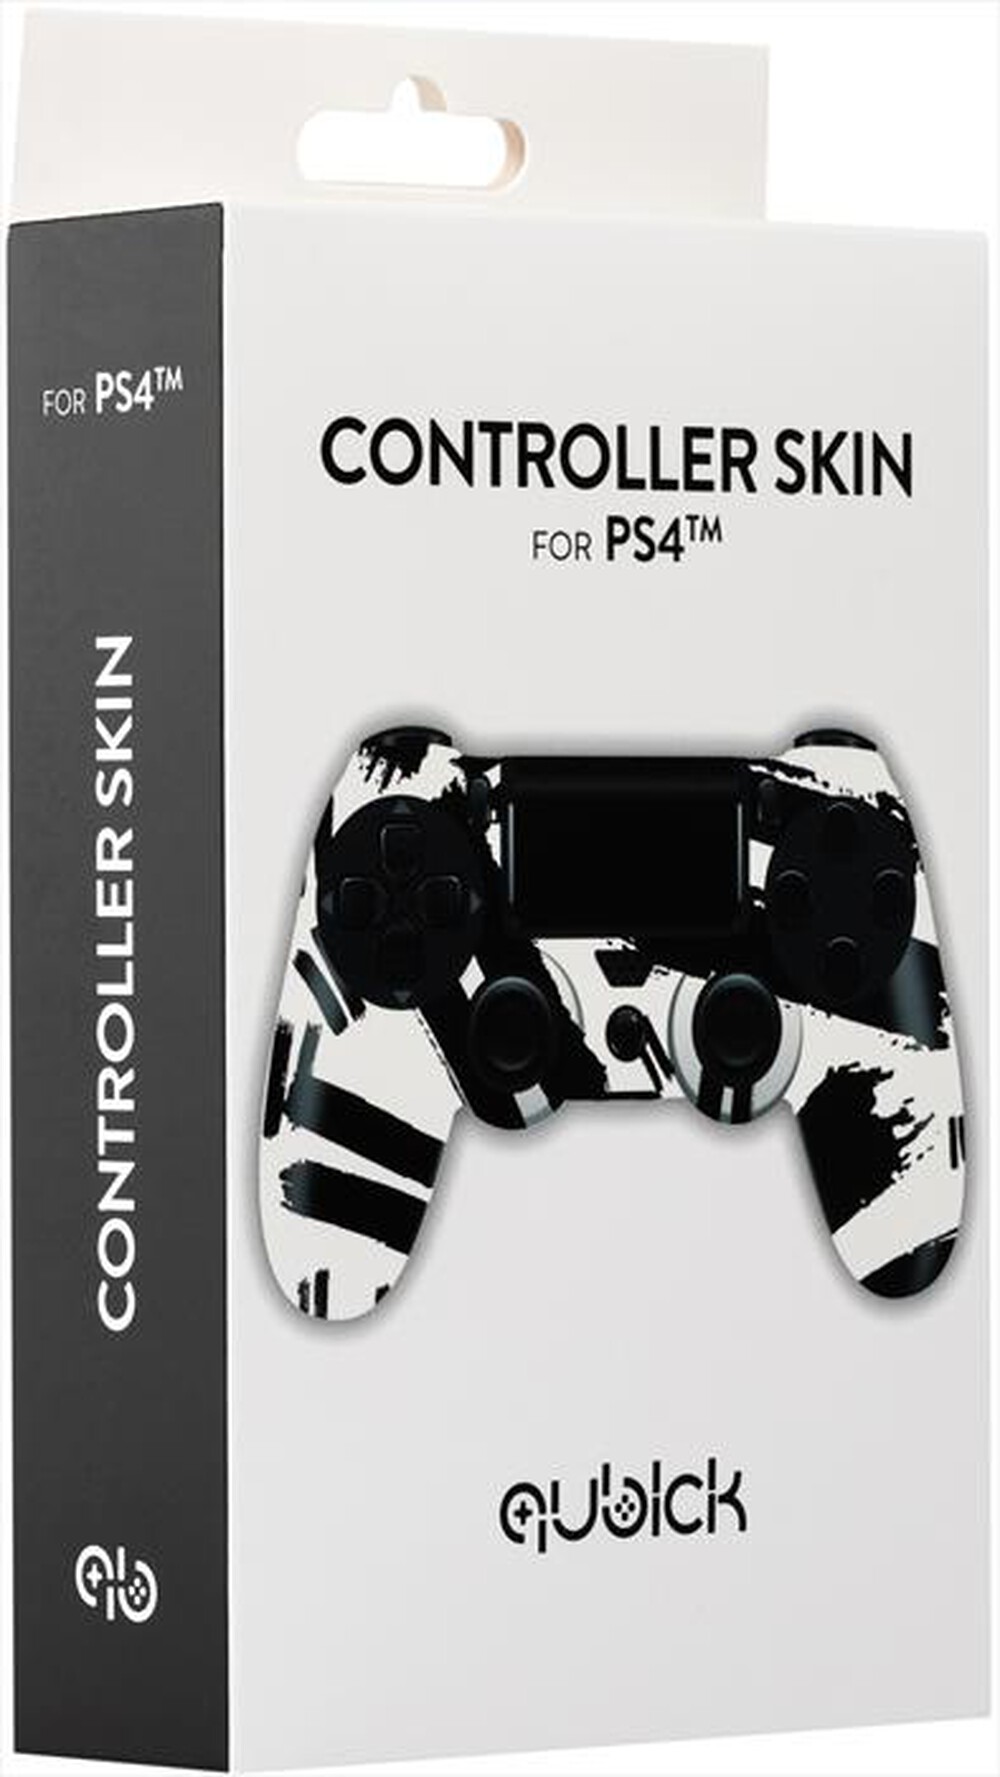 "QUBICK - CONTROLLER SKIN (PS4)-NERO BIANCO"